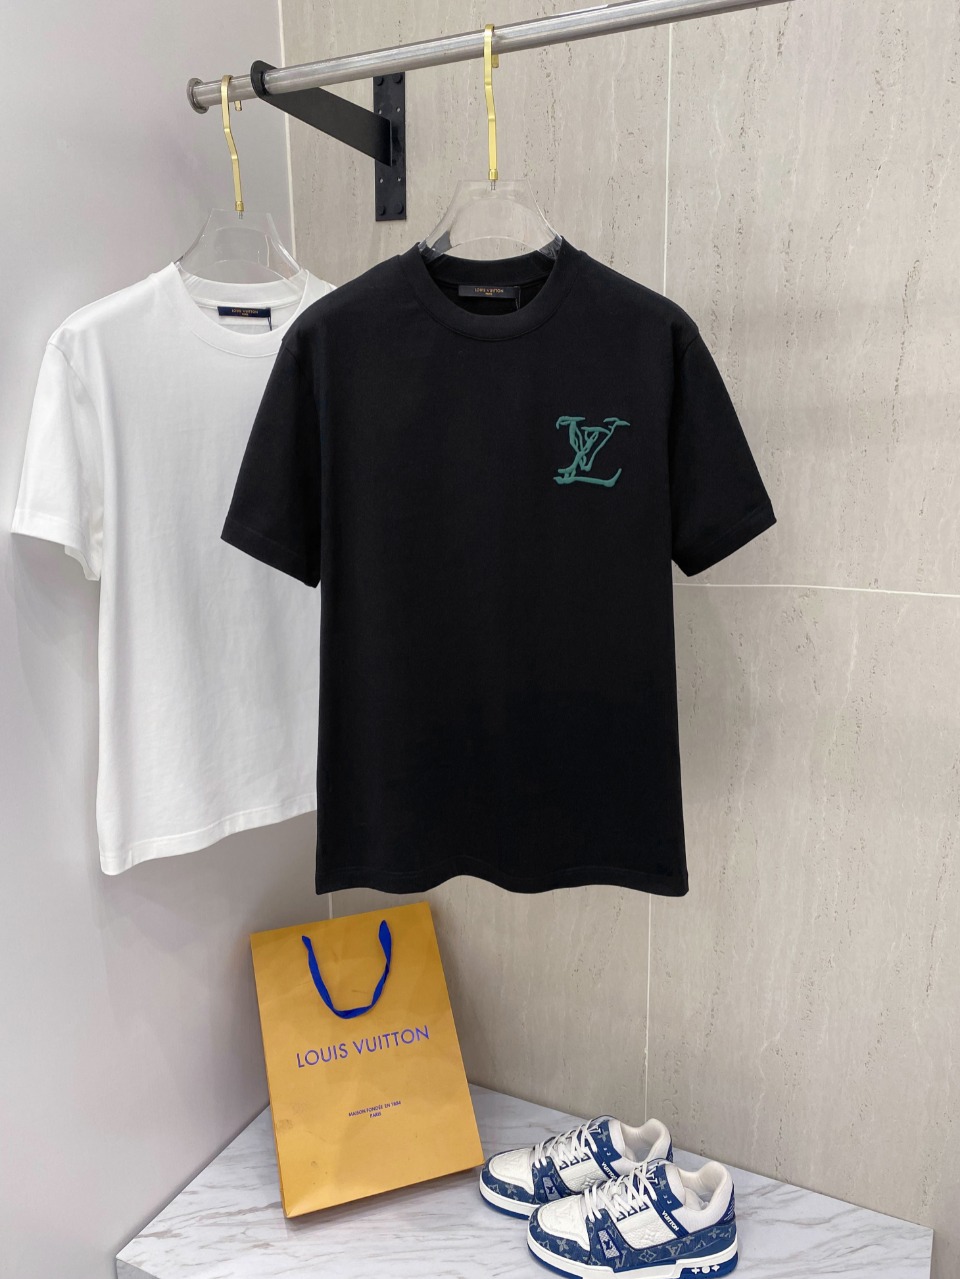 Designer Wholesale Replica
 Louis Vuitton Clothing T-Shirt Black Khaki White Embroidery Unisex Cotton Spring/Summer Collection Short Sleeve